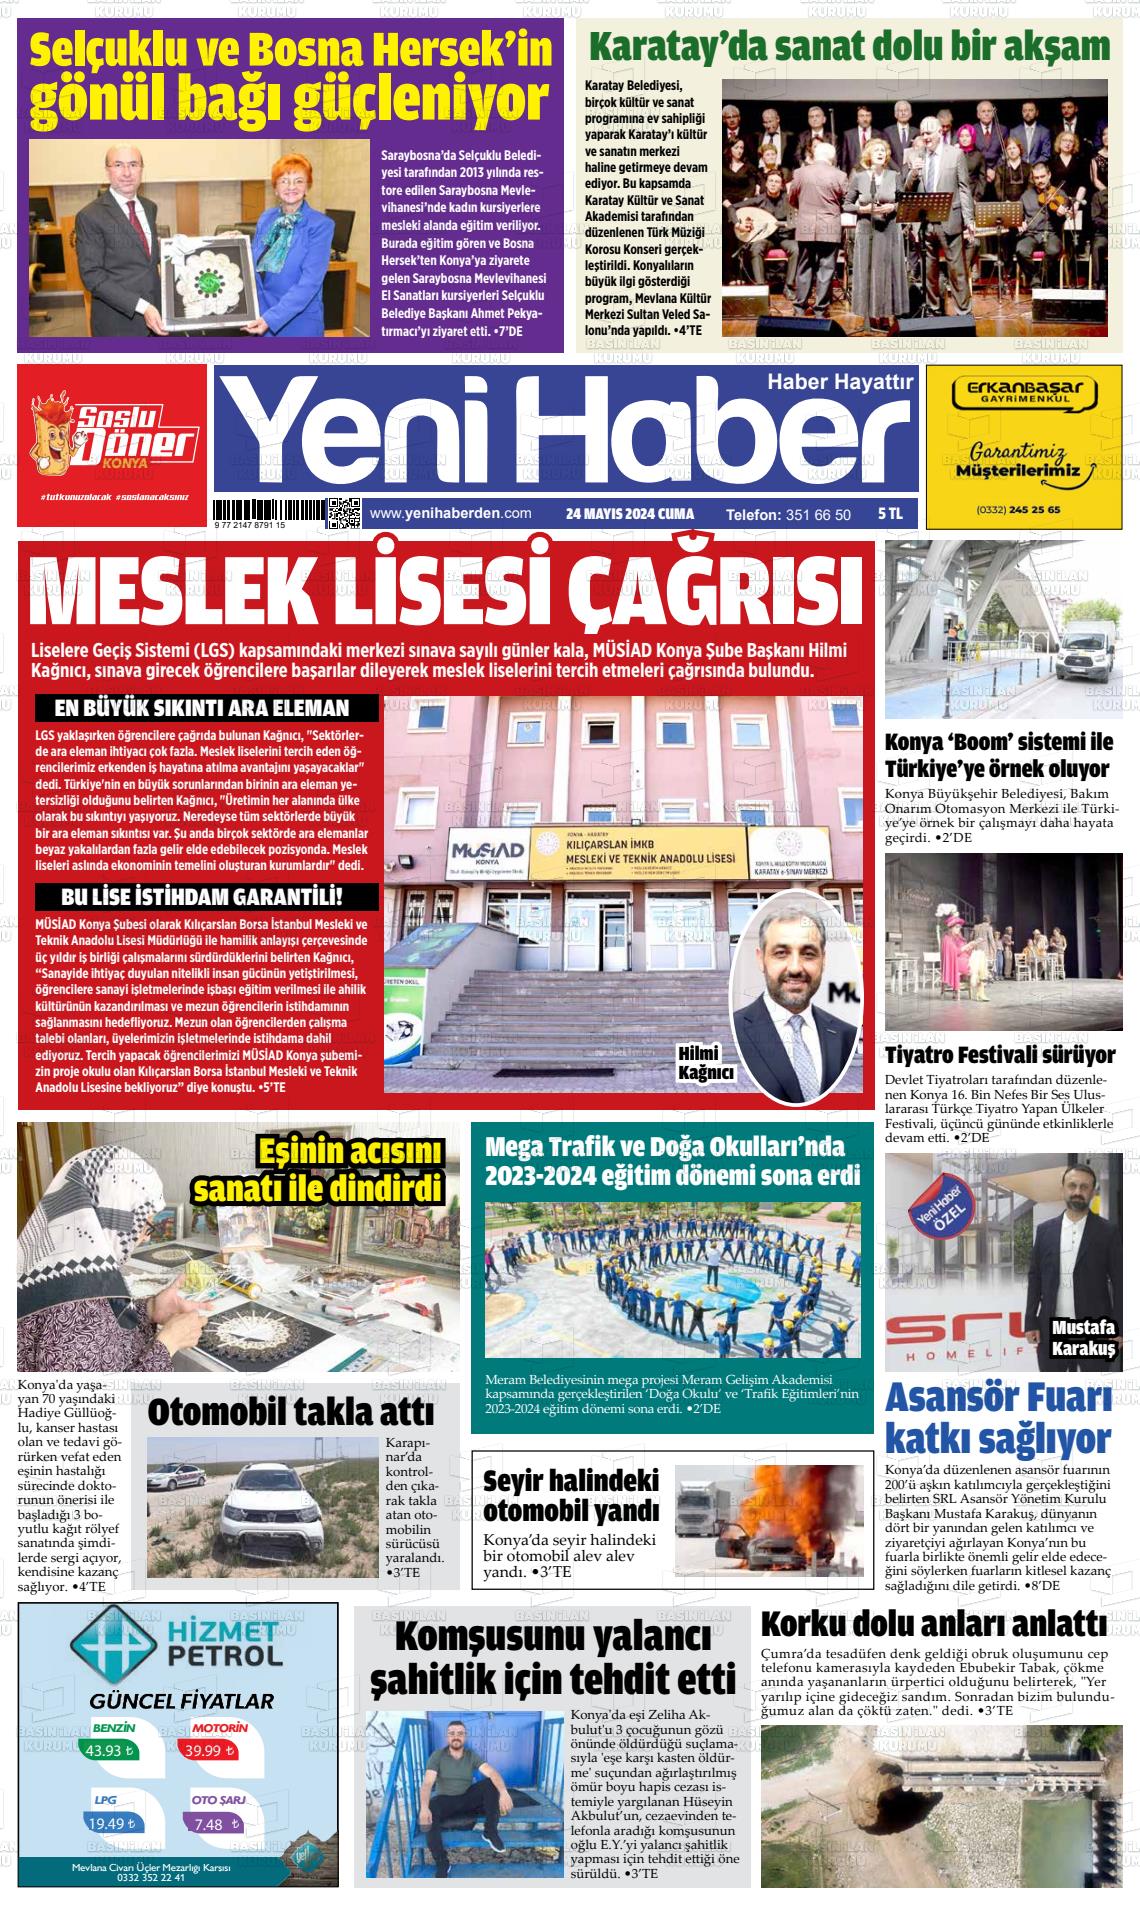 YENİ HABER Gazetesi